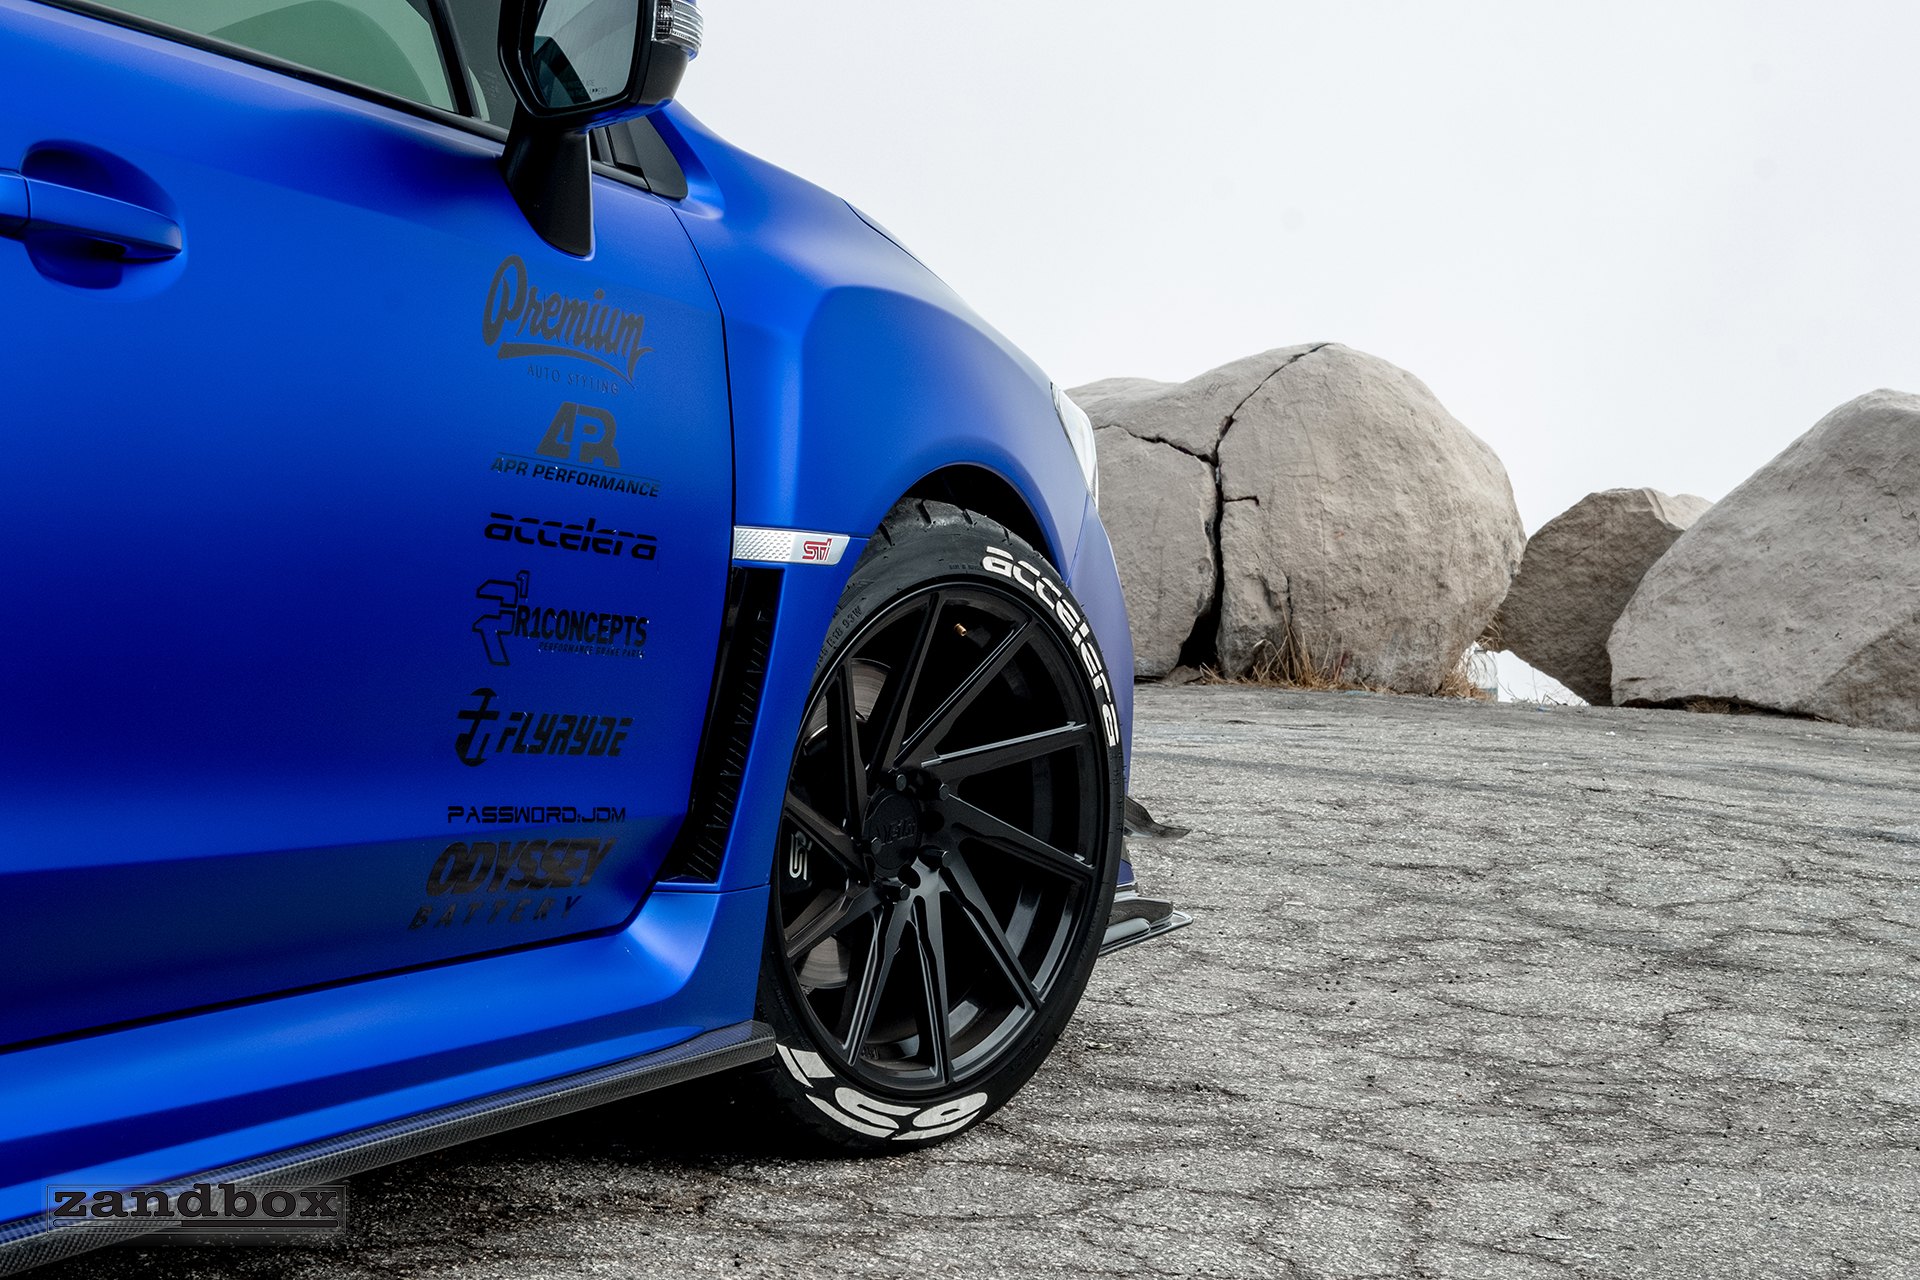 Carbon Fiber Side Skirts on Blue Subaru WRX STI - Photo by zandbox